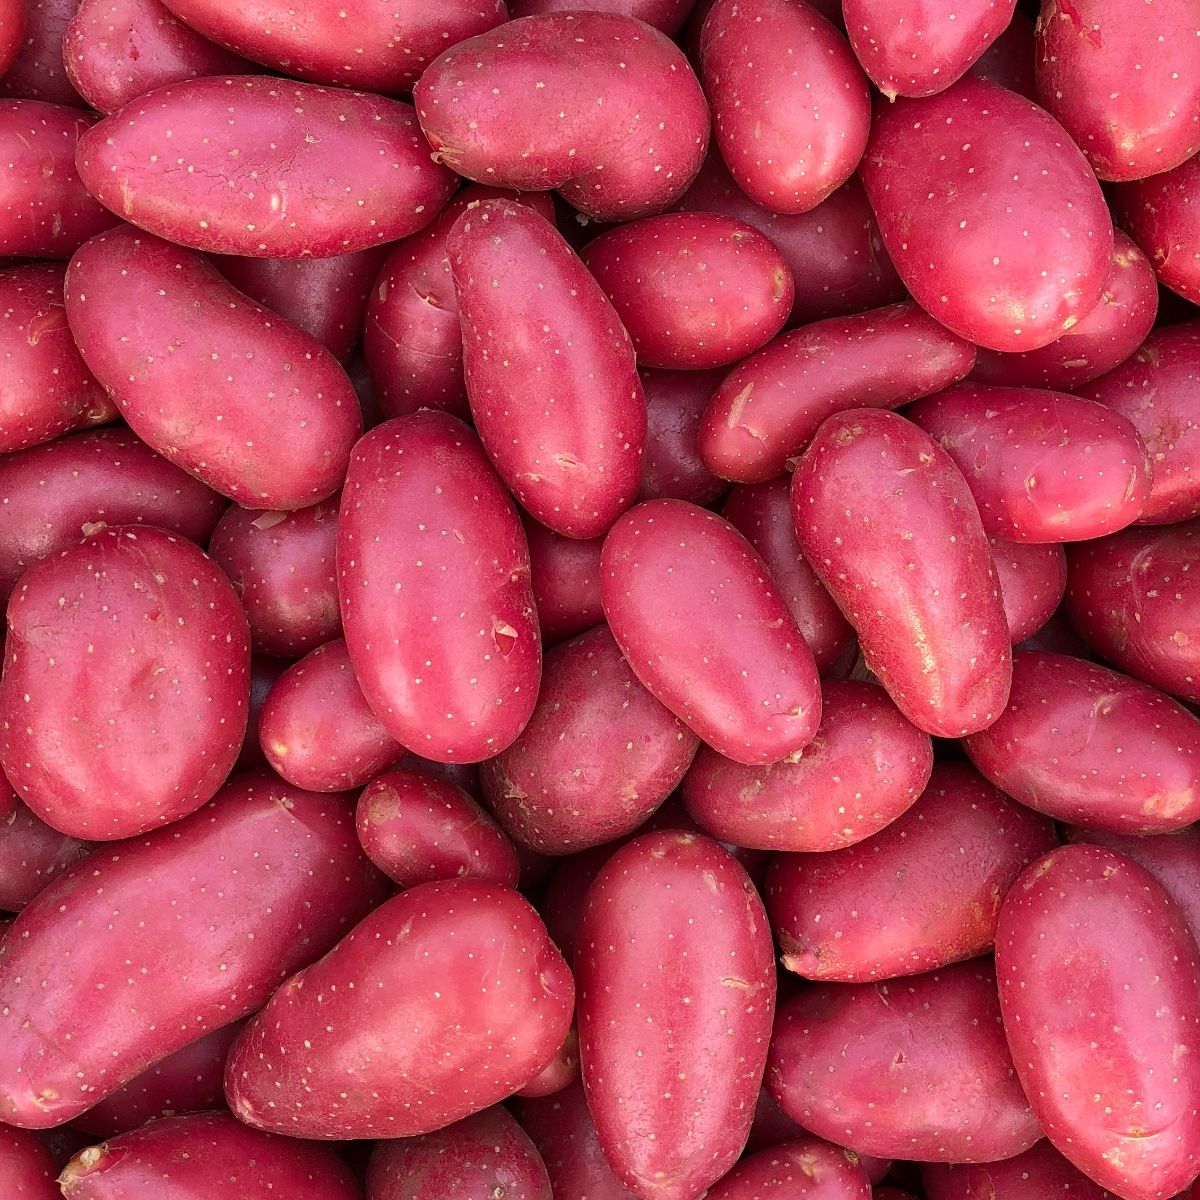 Scab resistant red AmaRosa potatoes